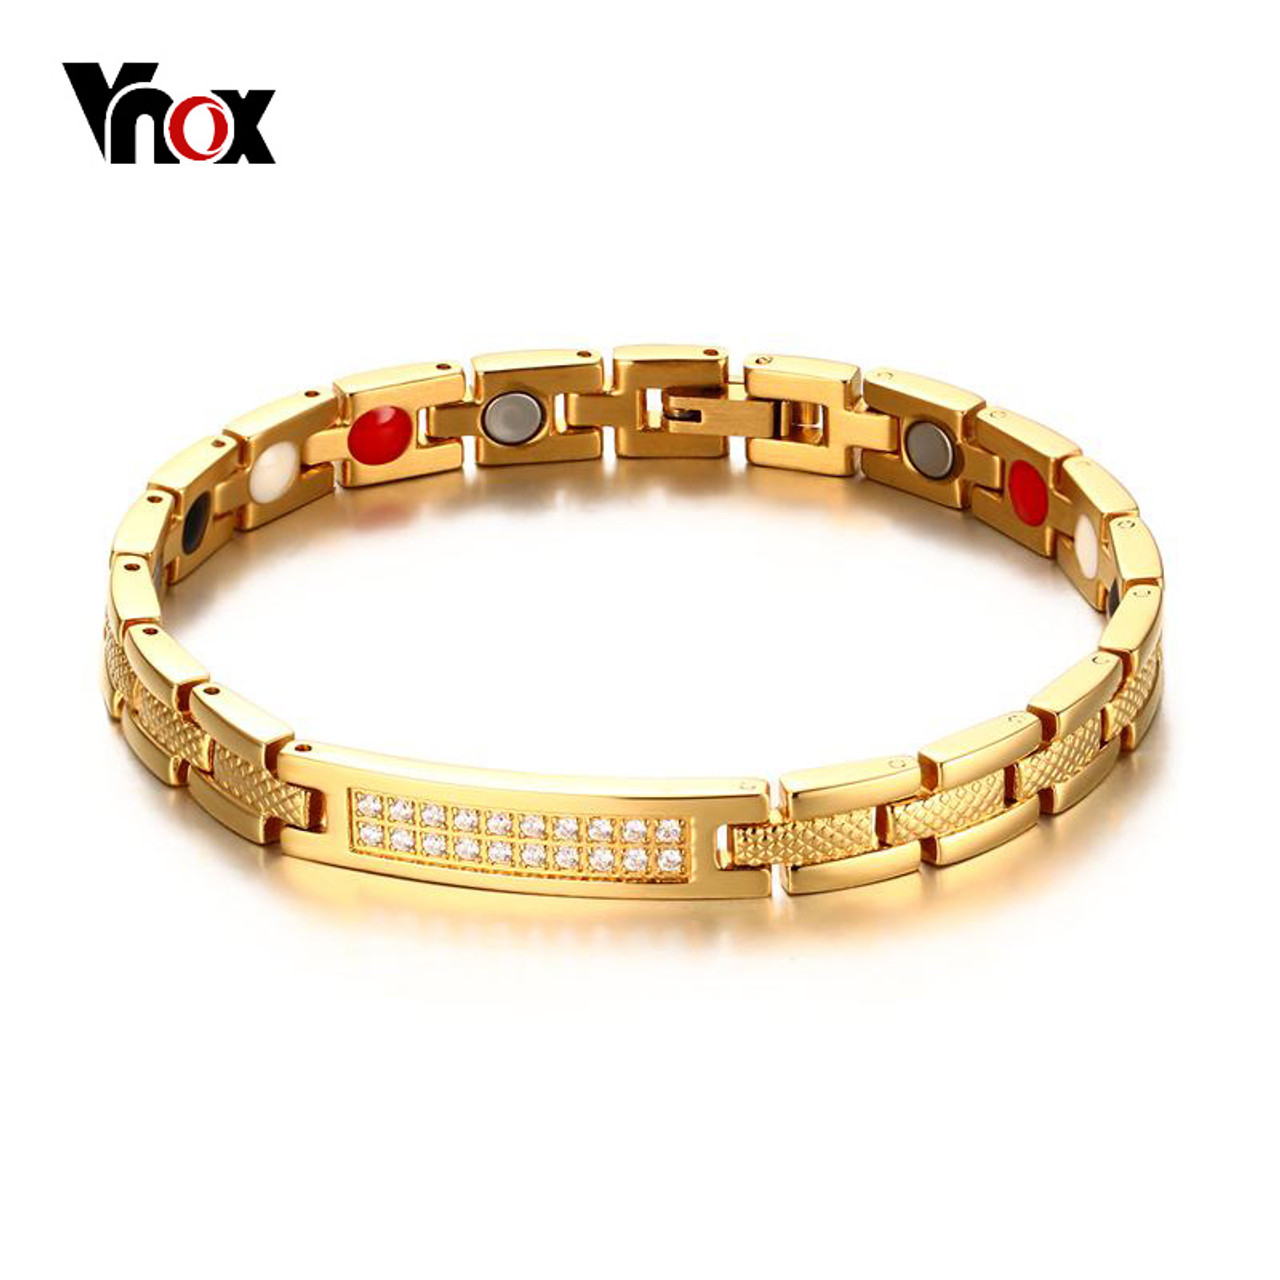 ettika Bracelet gold-colored casual look Jewelry Arm Decorations Bracelets 